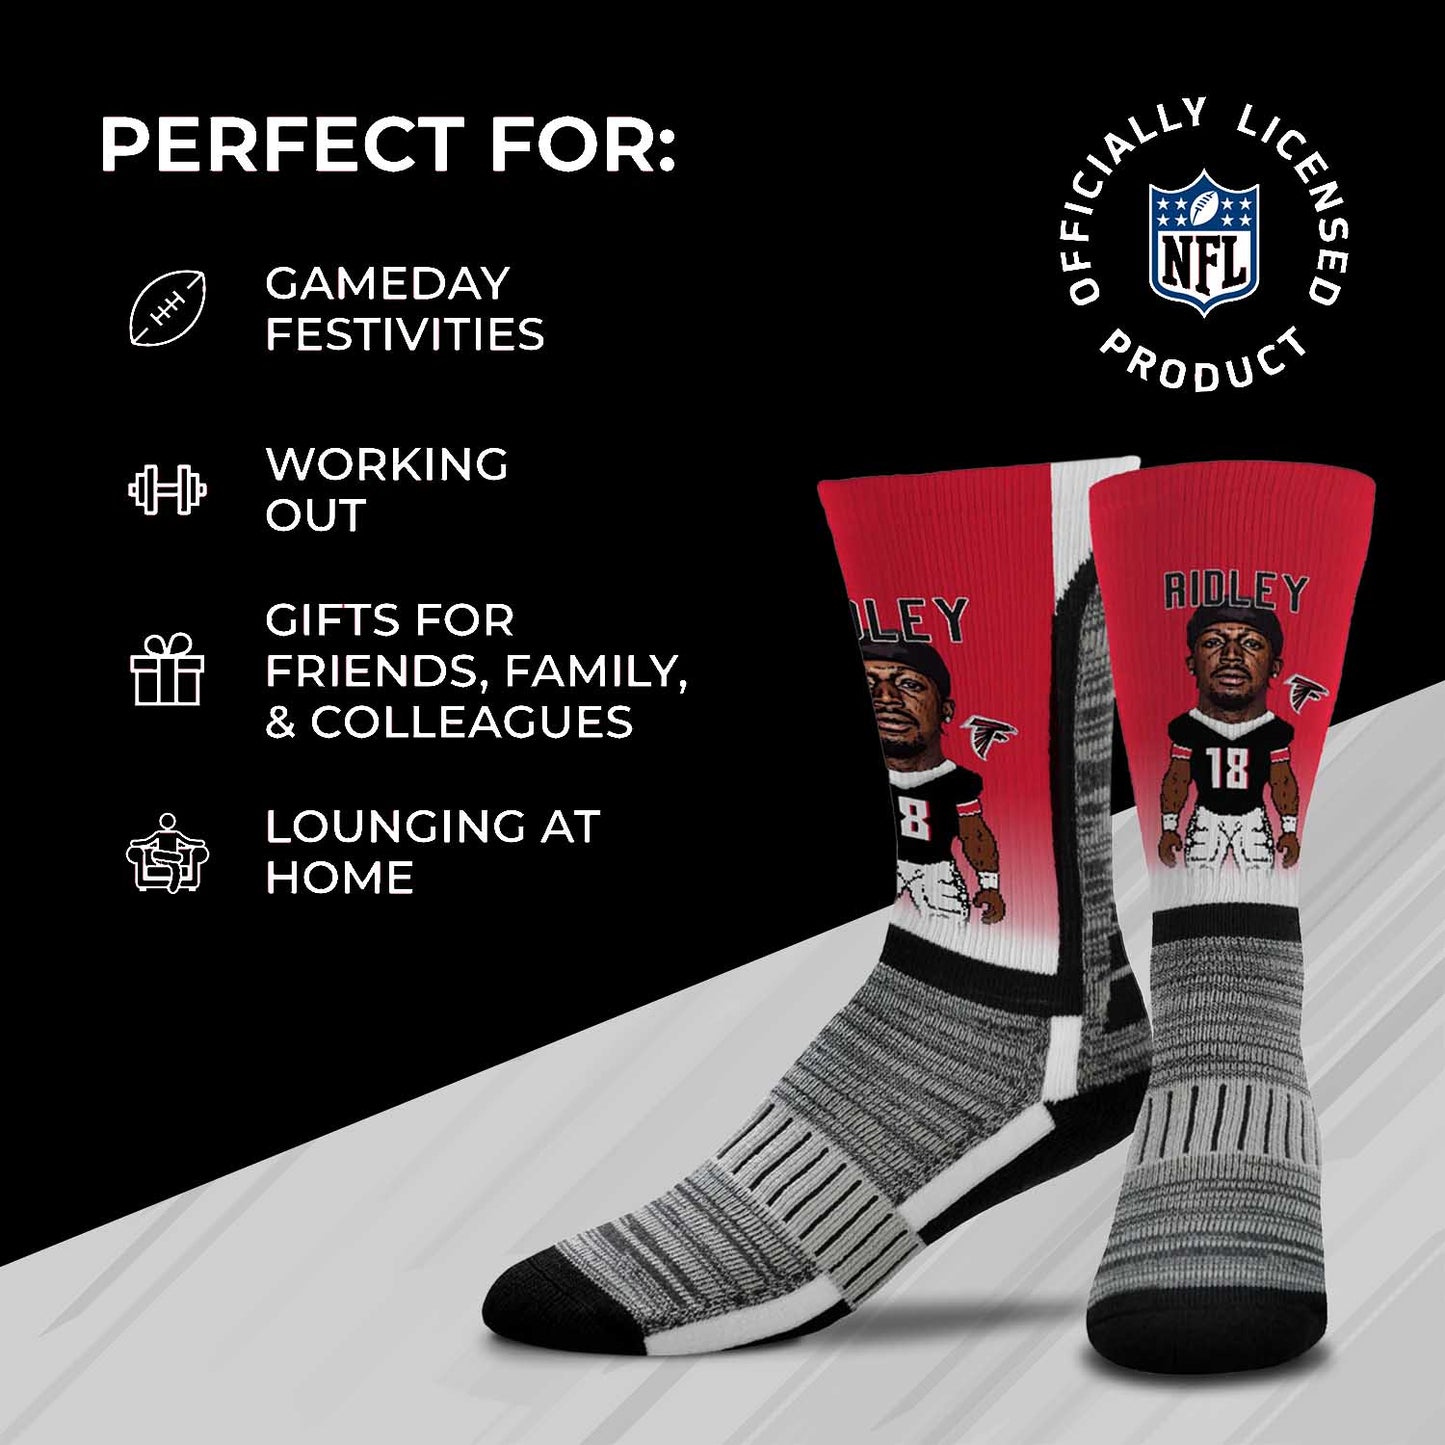 Atlanta Falcons FBF NFL Adult V Curve MVP Player Crew Socks - Red